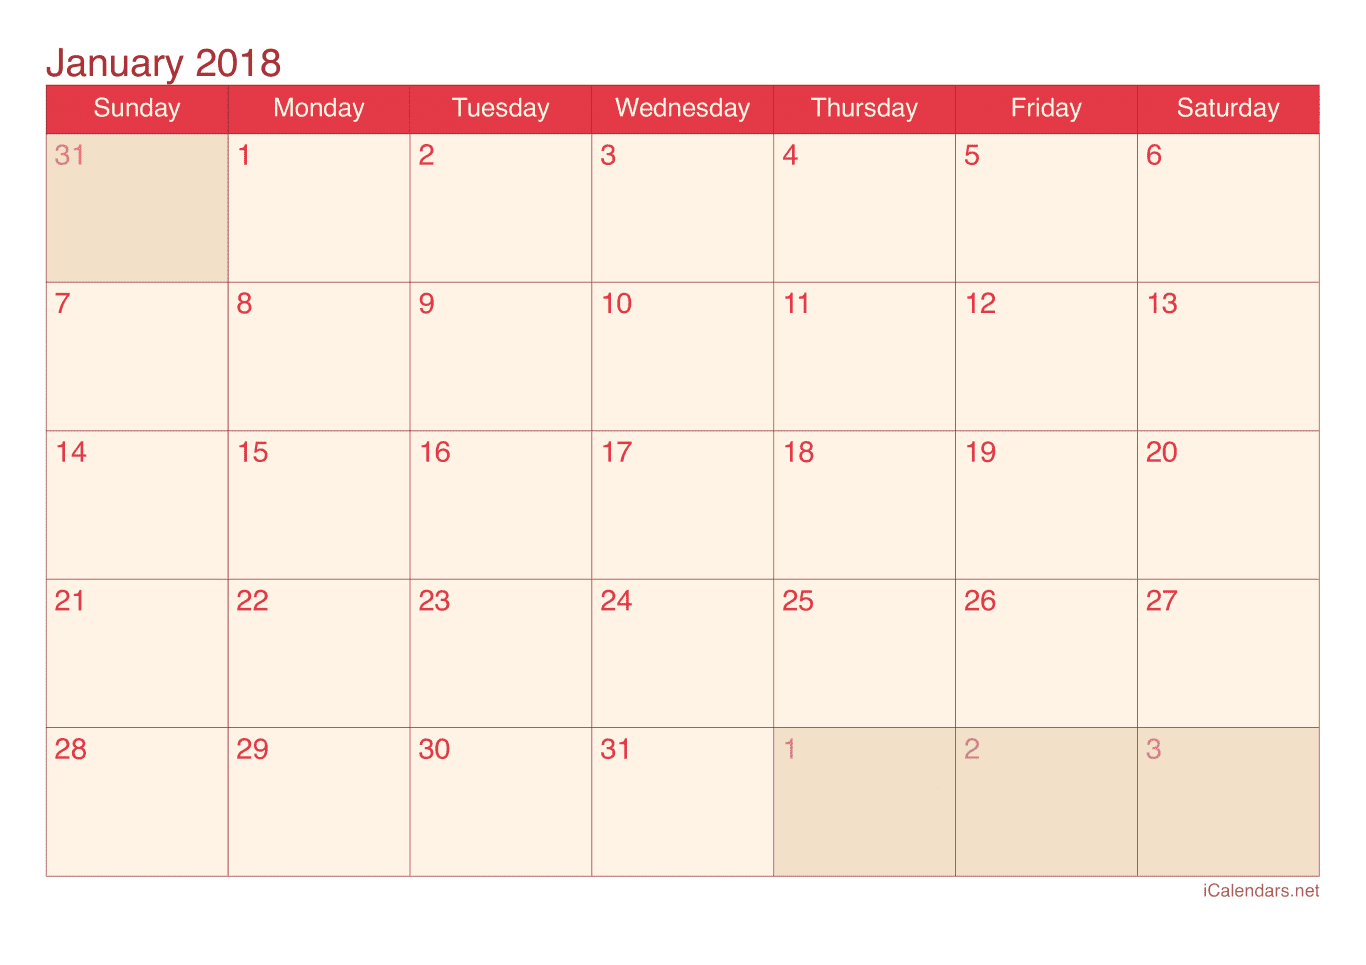 2018 Monthly Calendar - Cherry